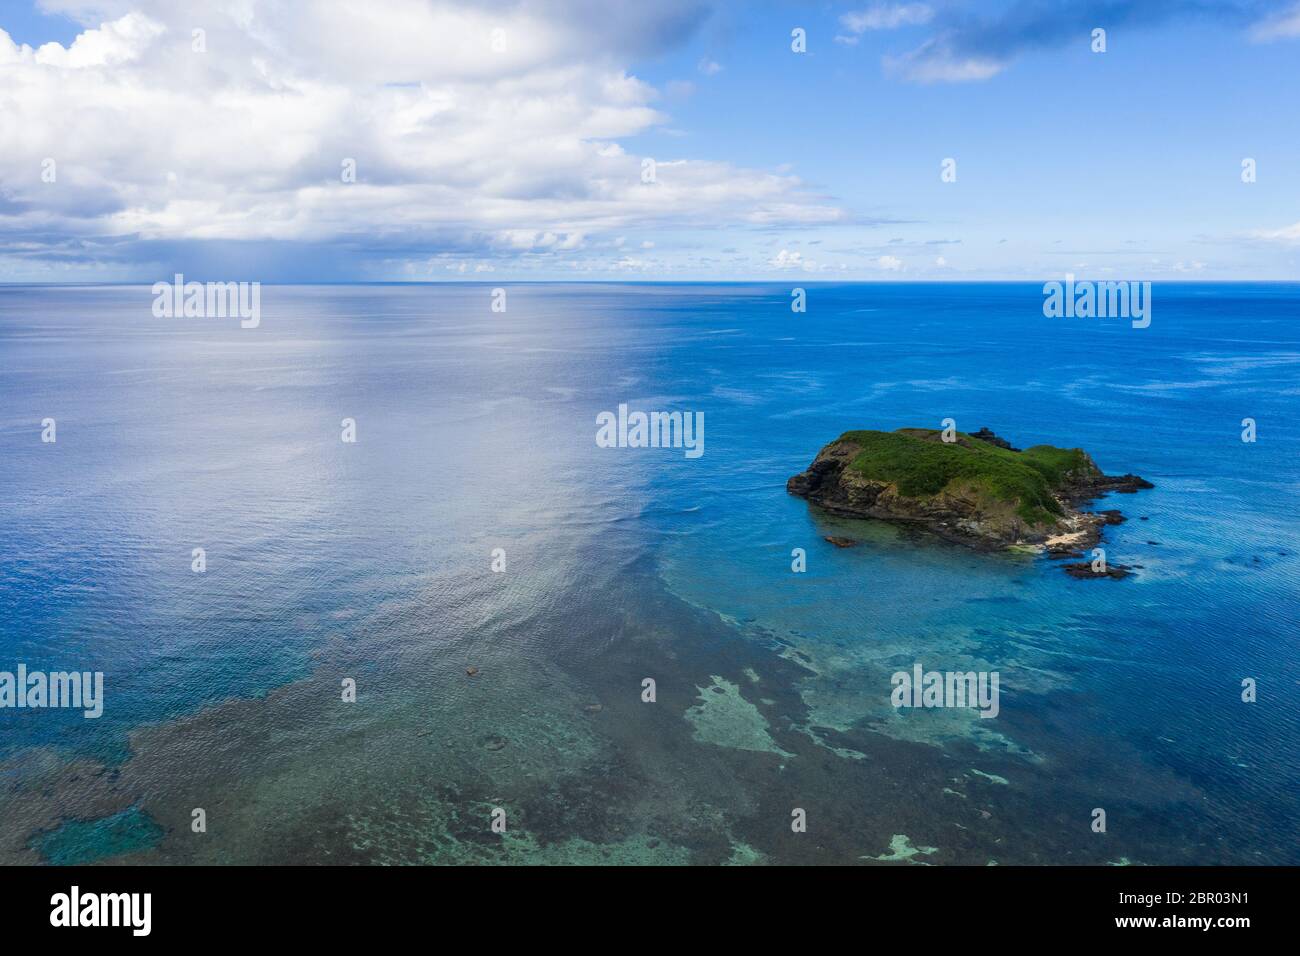 Vue de dessus Cape Hirakubozaki sur l'île Ishigaki Banque D'Images